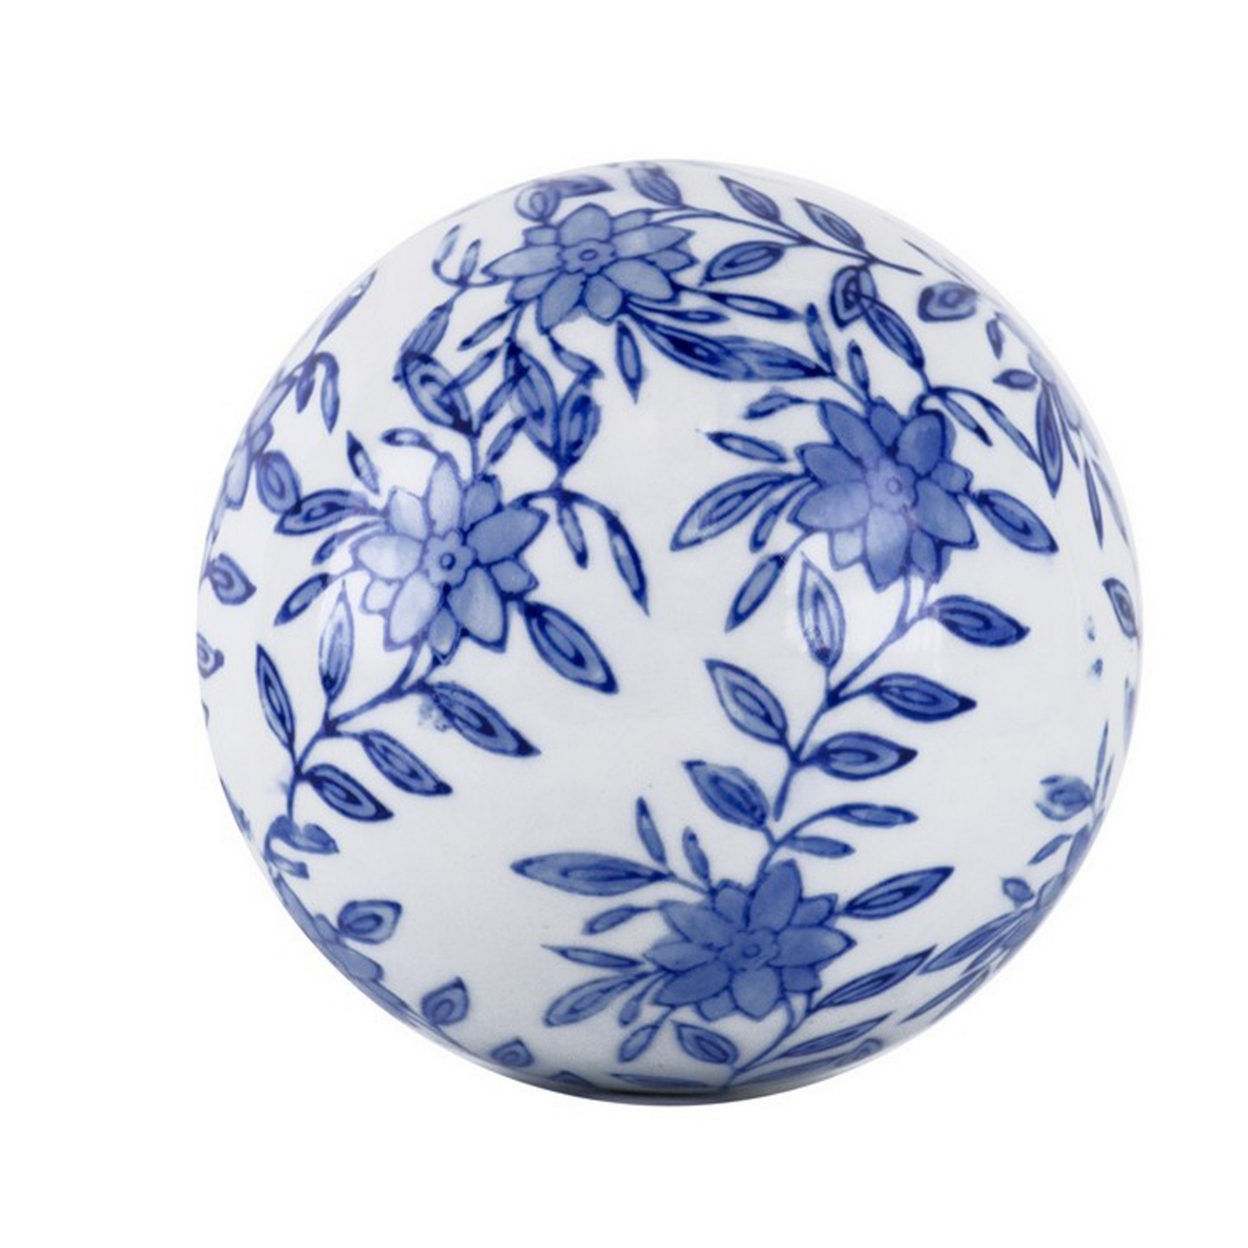 4 Inch Decorative Porcelain Stones, Blue And White Print, Set Of 6- Saltoro Sherpi